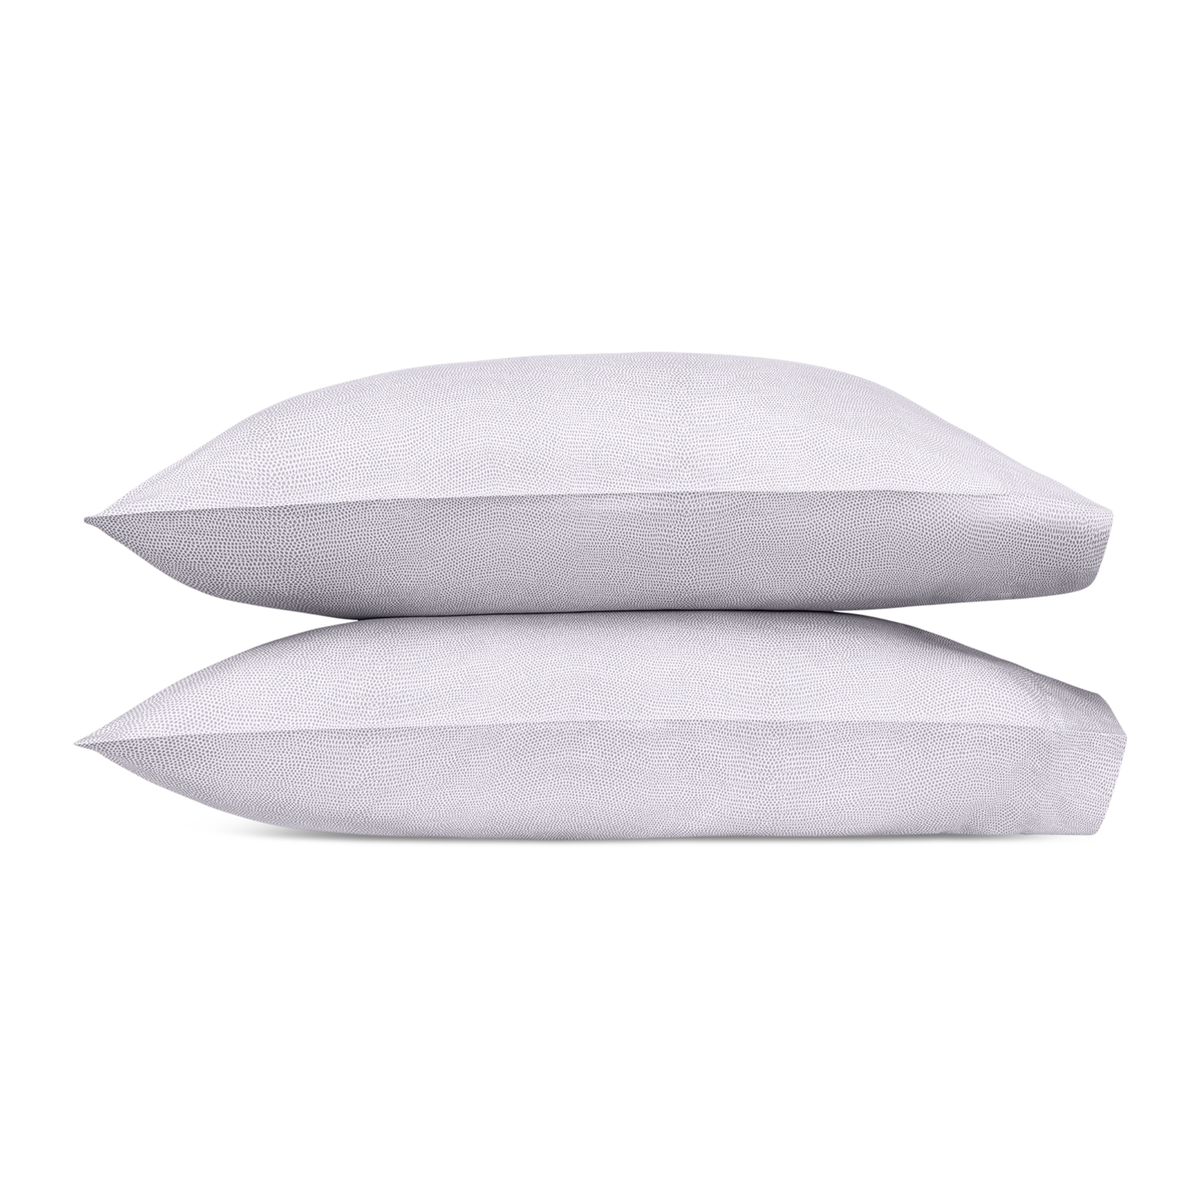 Pair of Pillowcases of Fawn Matouk Jasper Bedding